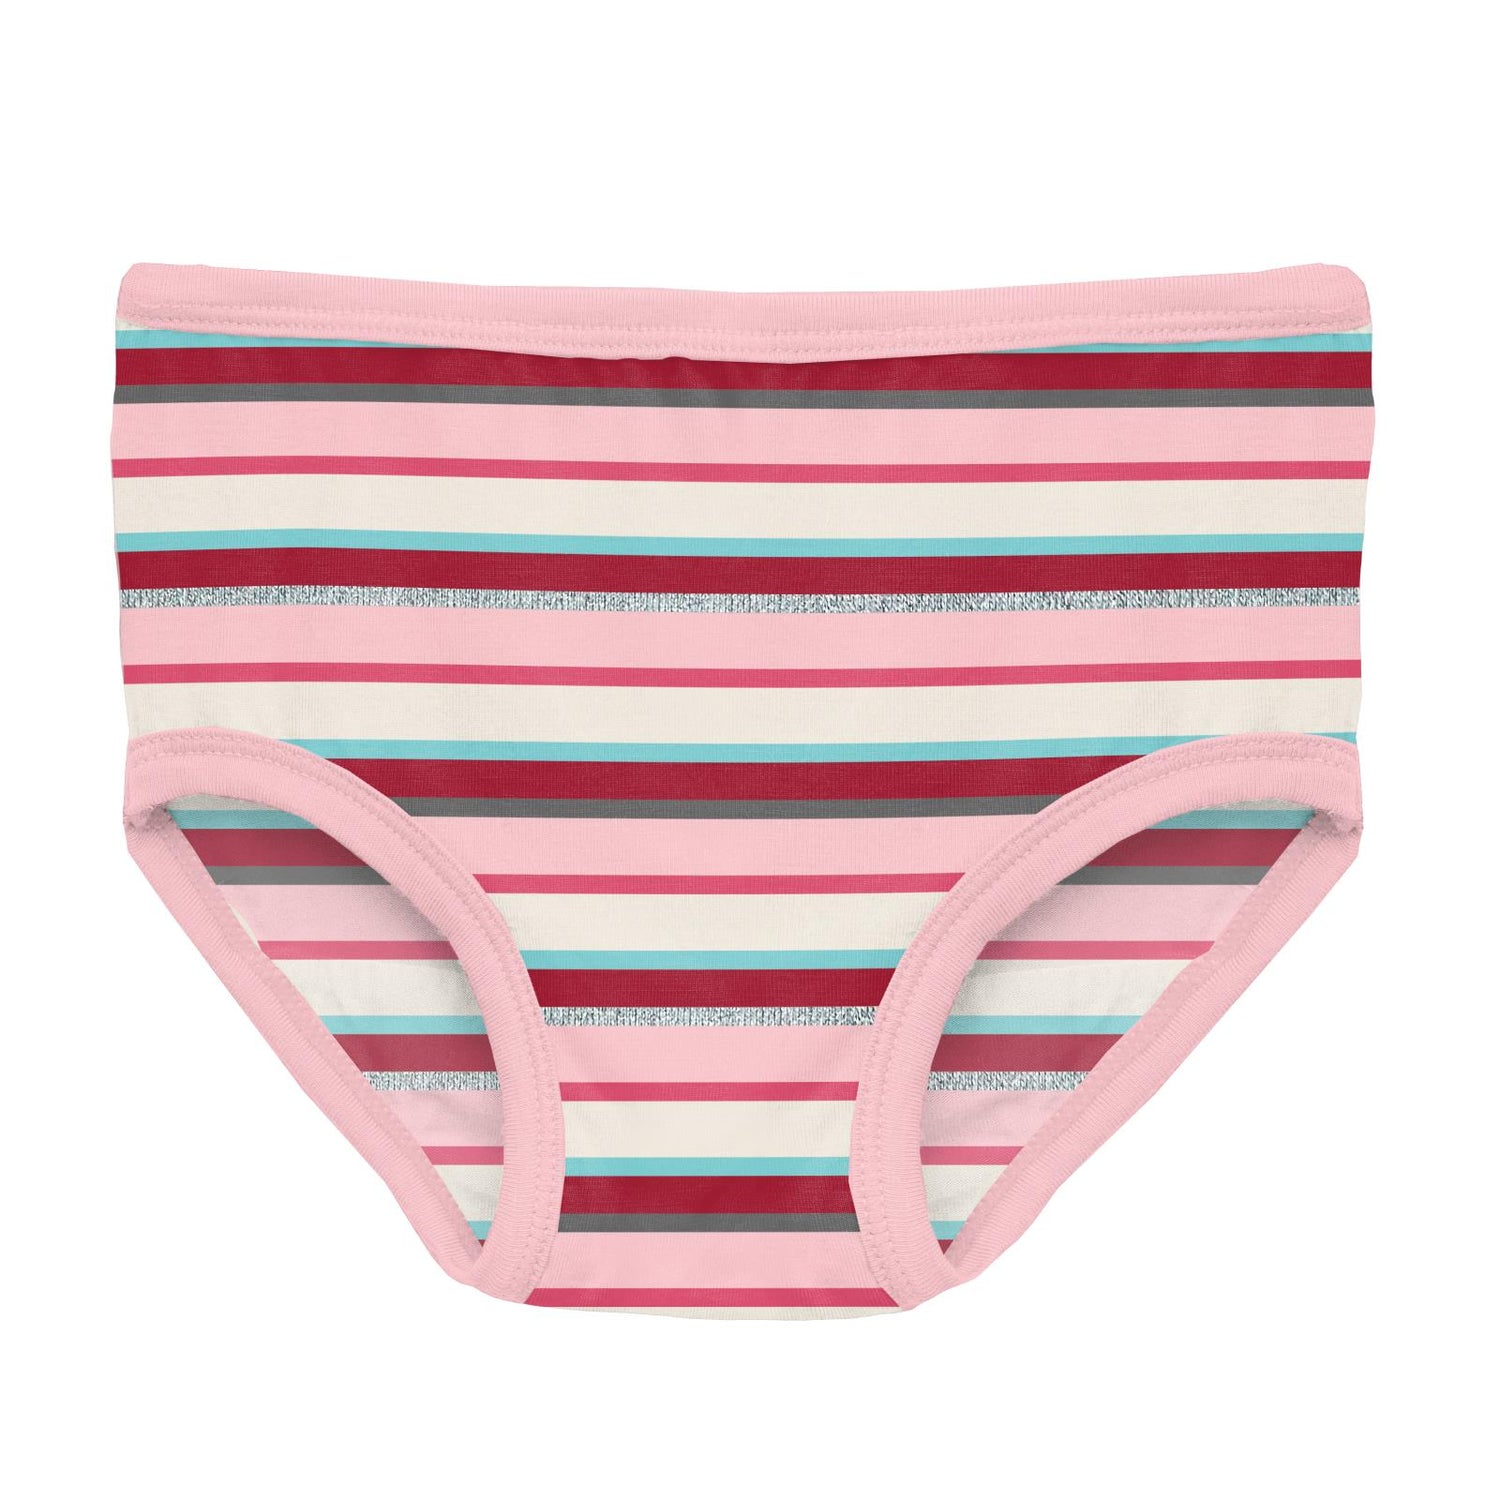 Print Girl's Underwear in Anniversary Bobsled Stripe